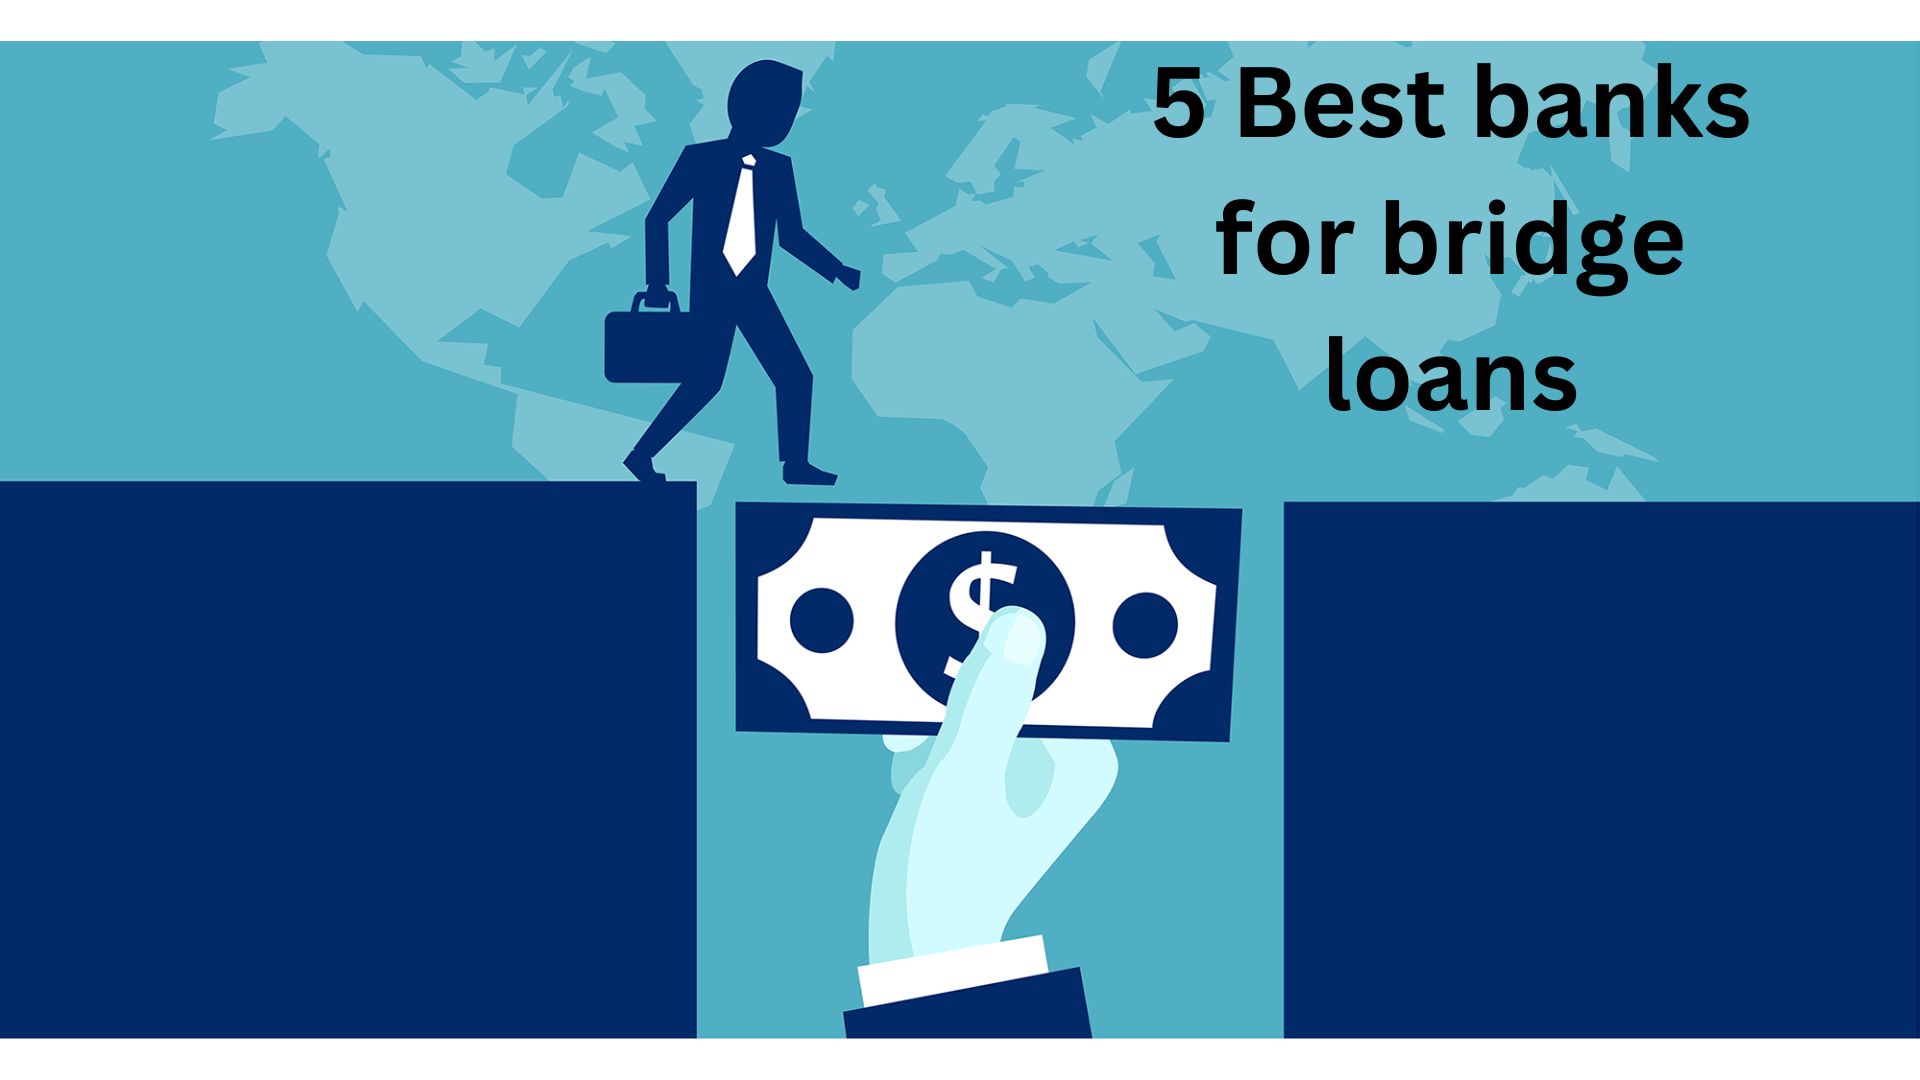 5 Best banks for bridge loans